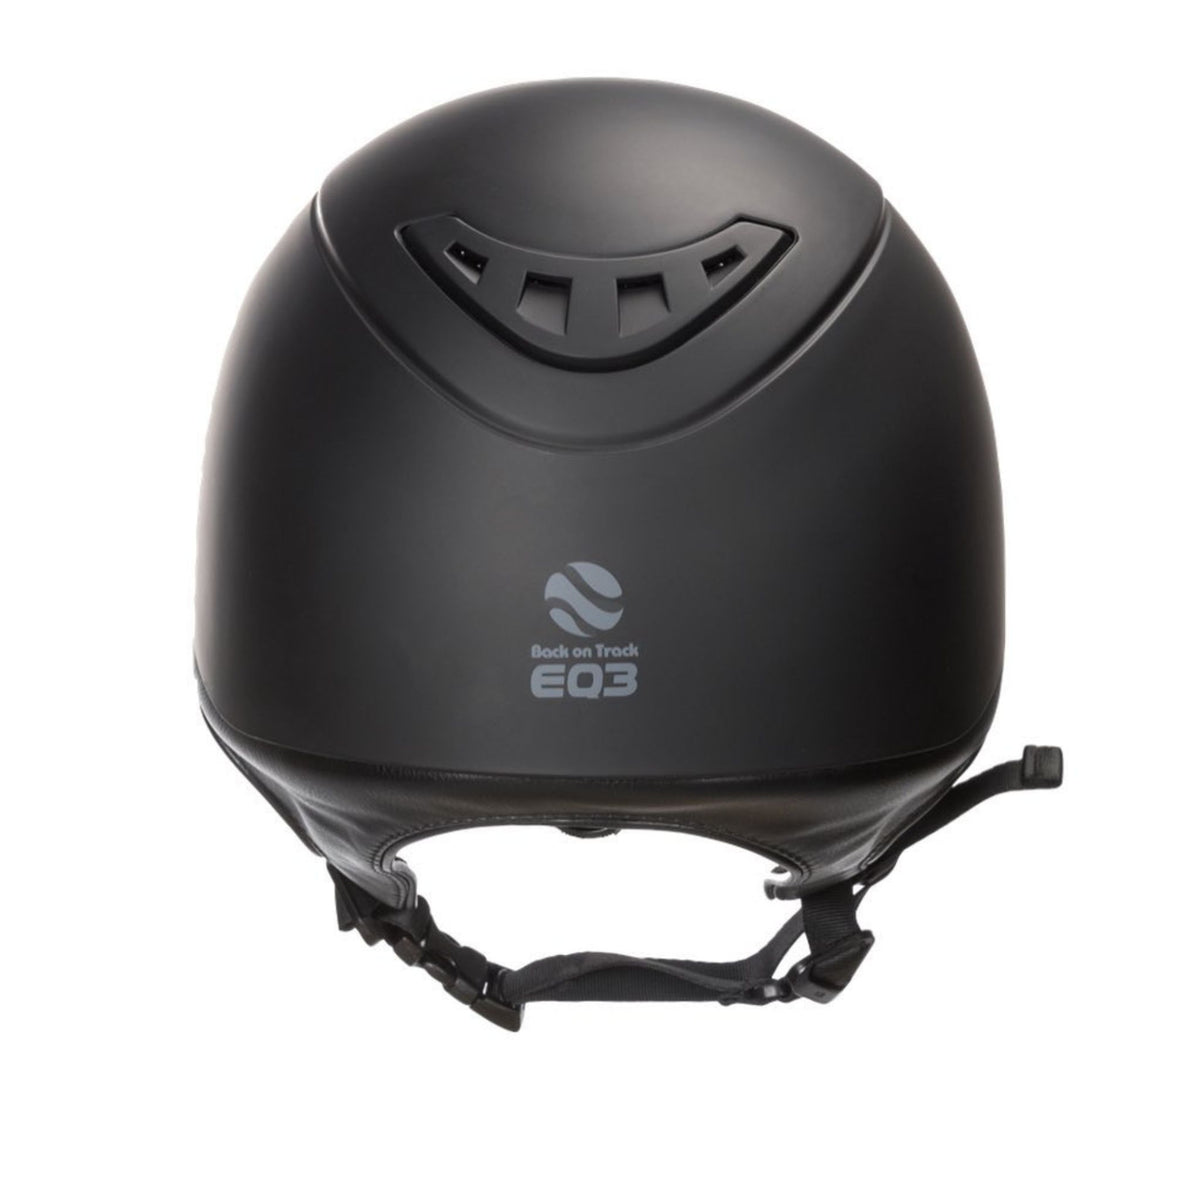 Black helmet with the EQ3 back on trach logo.